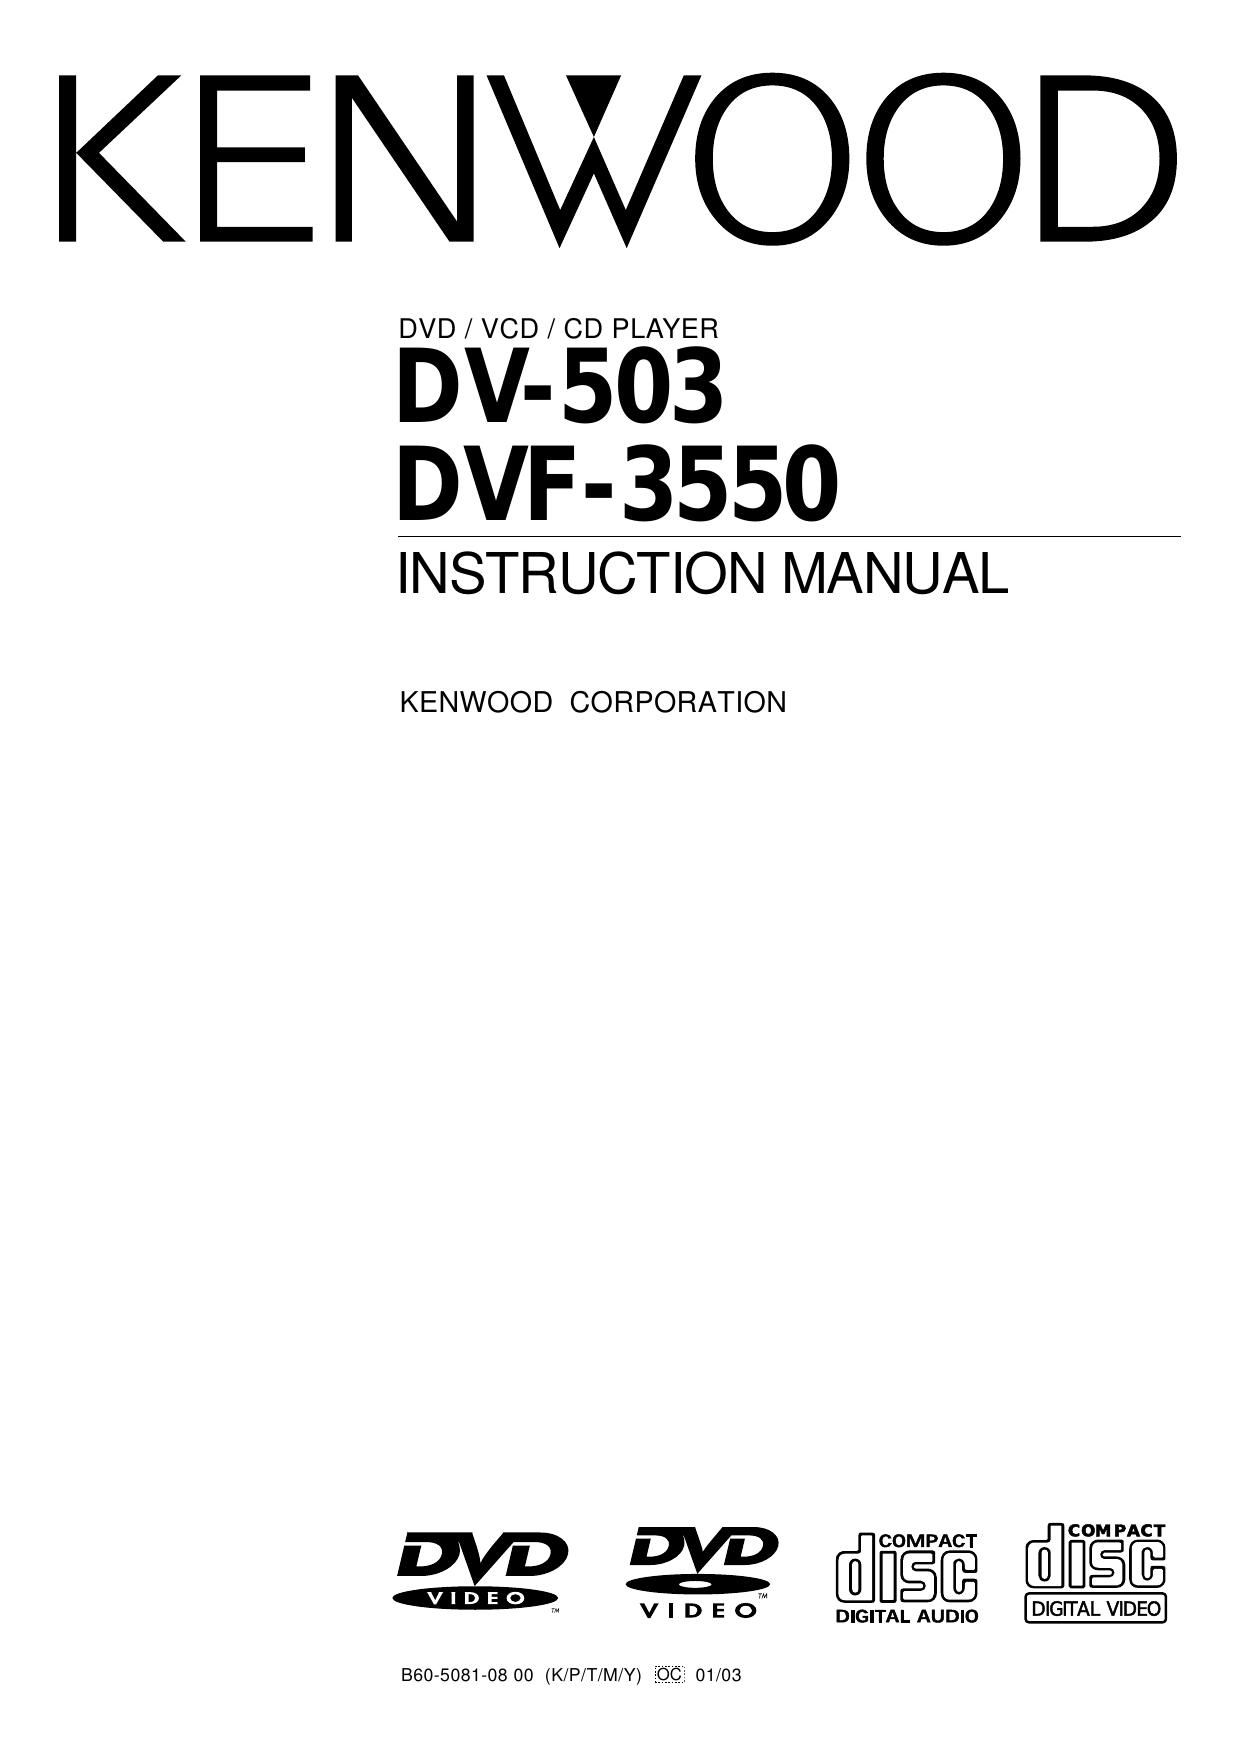 Kenwood DV 503 Owners Manual